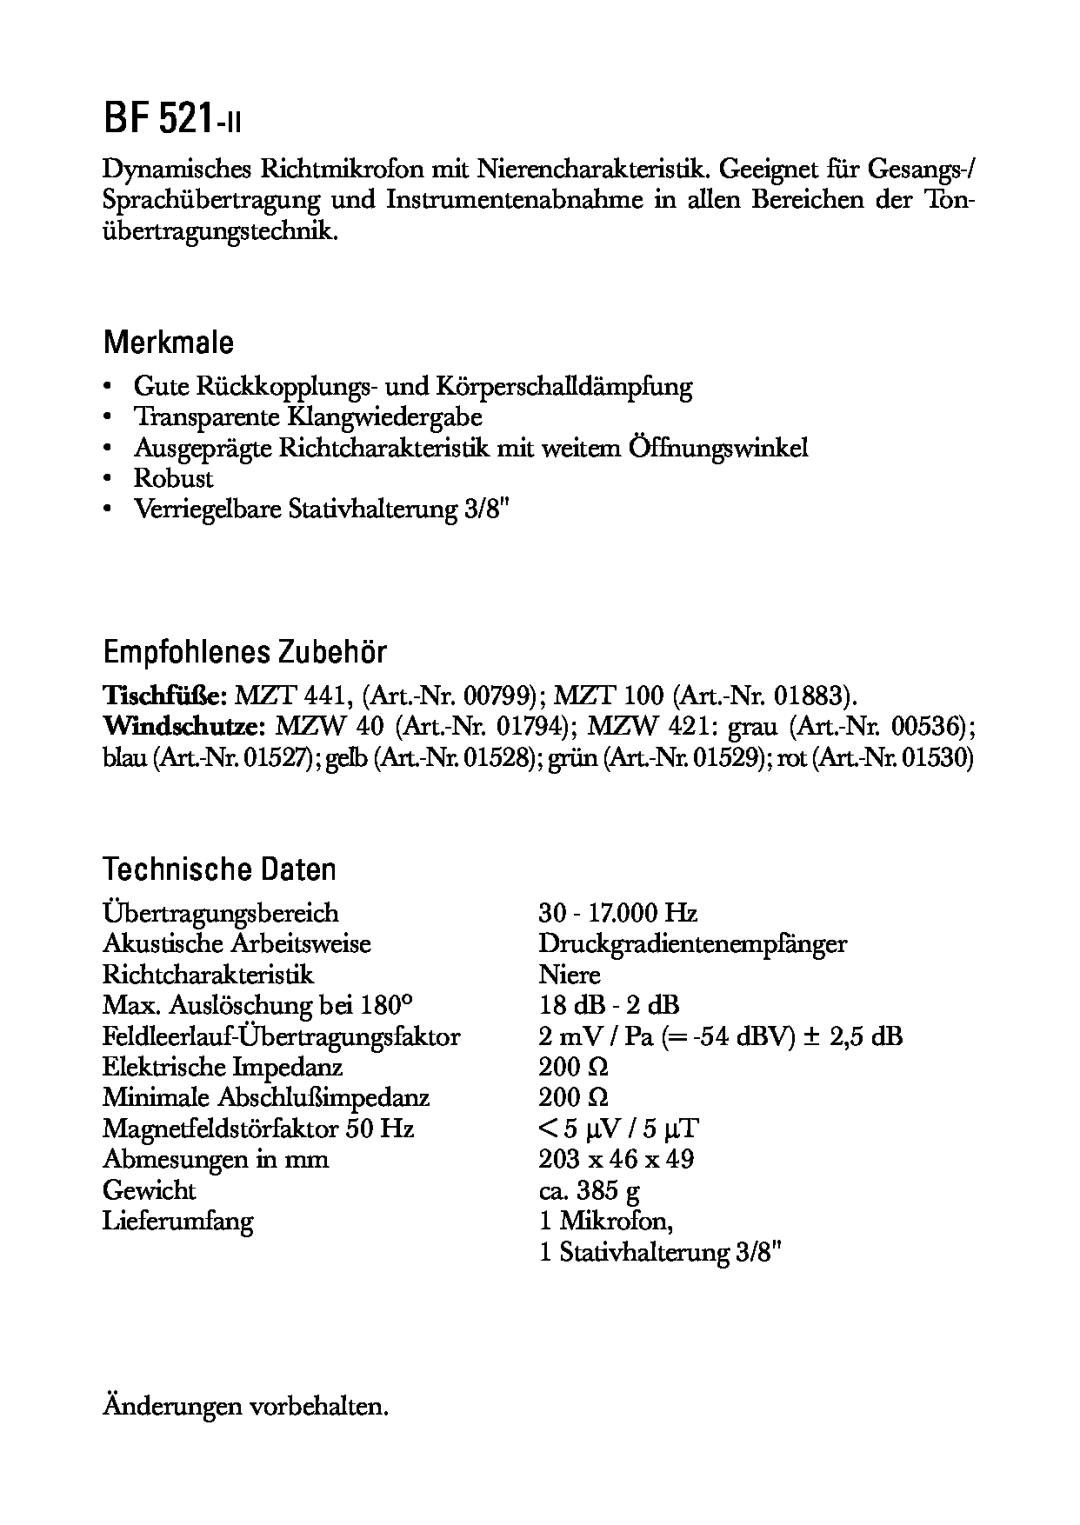 Sennheiser BF 521-II manual Merkmale, Empfohlenes Zubehör, Technische Daten 